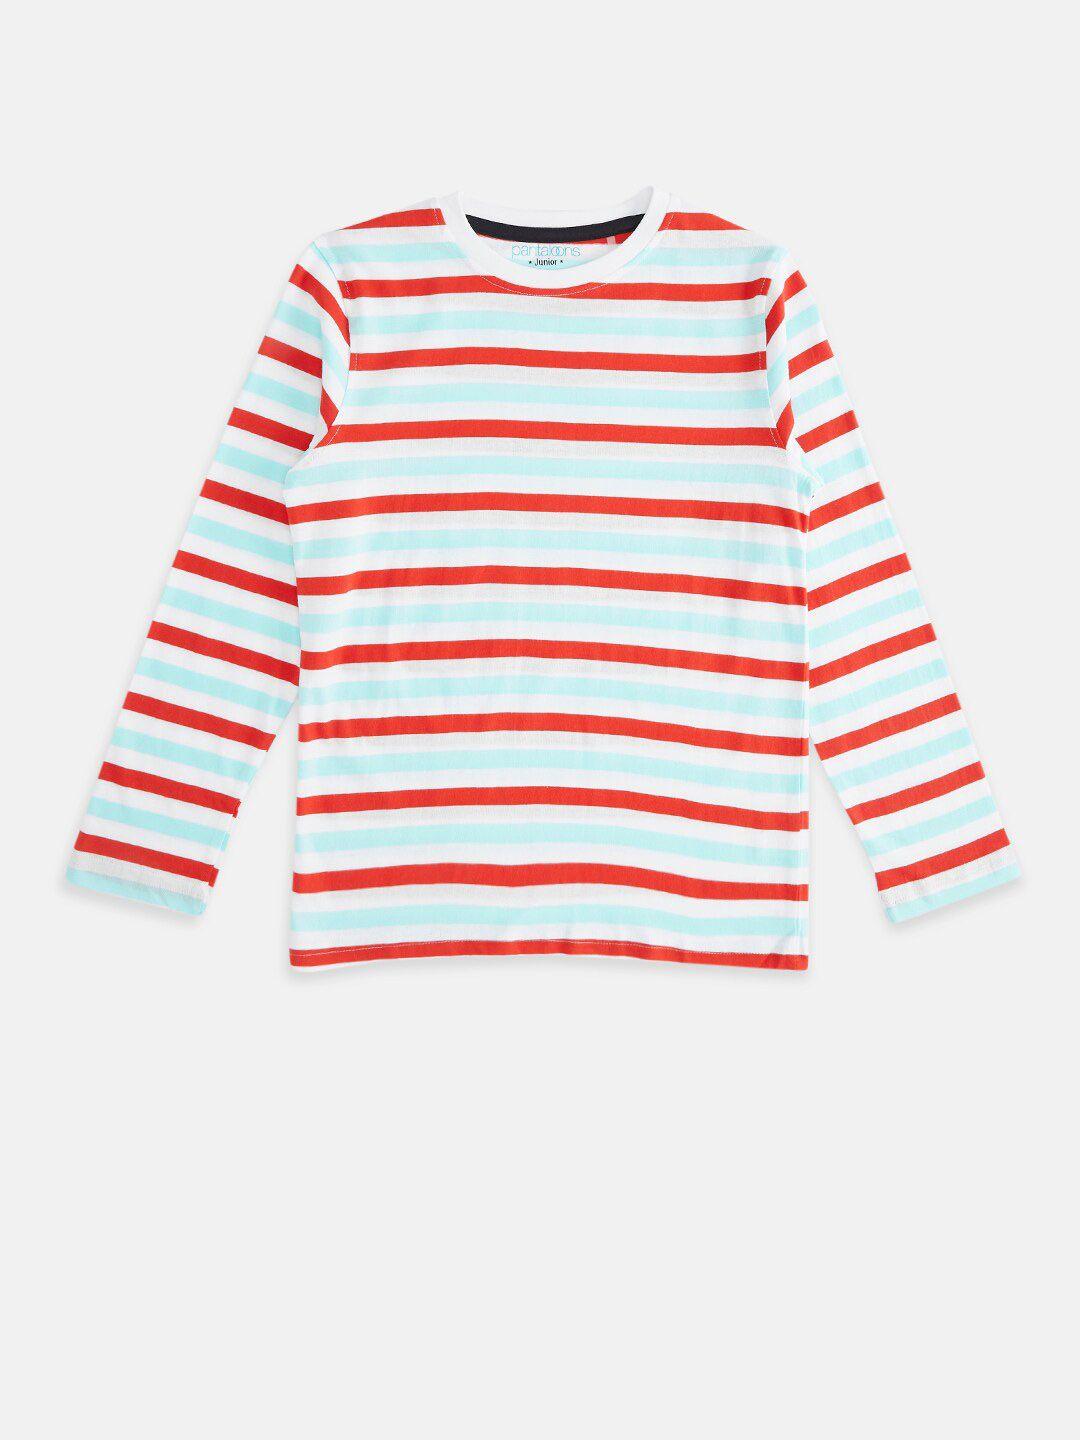 pantaloons junior boys white & red striped pure cotton t-shirt